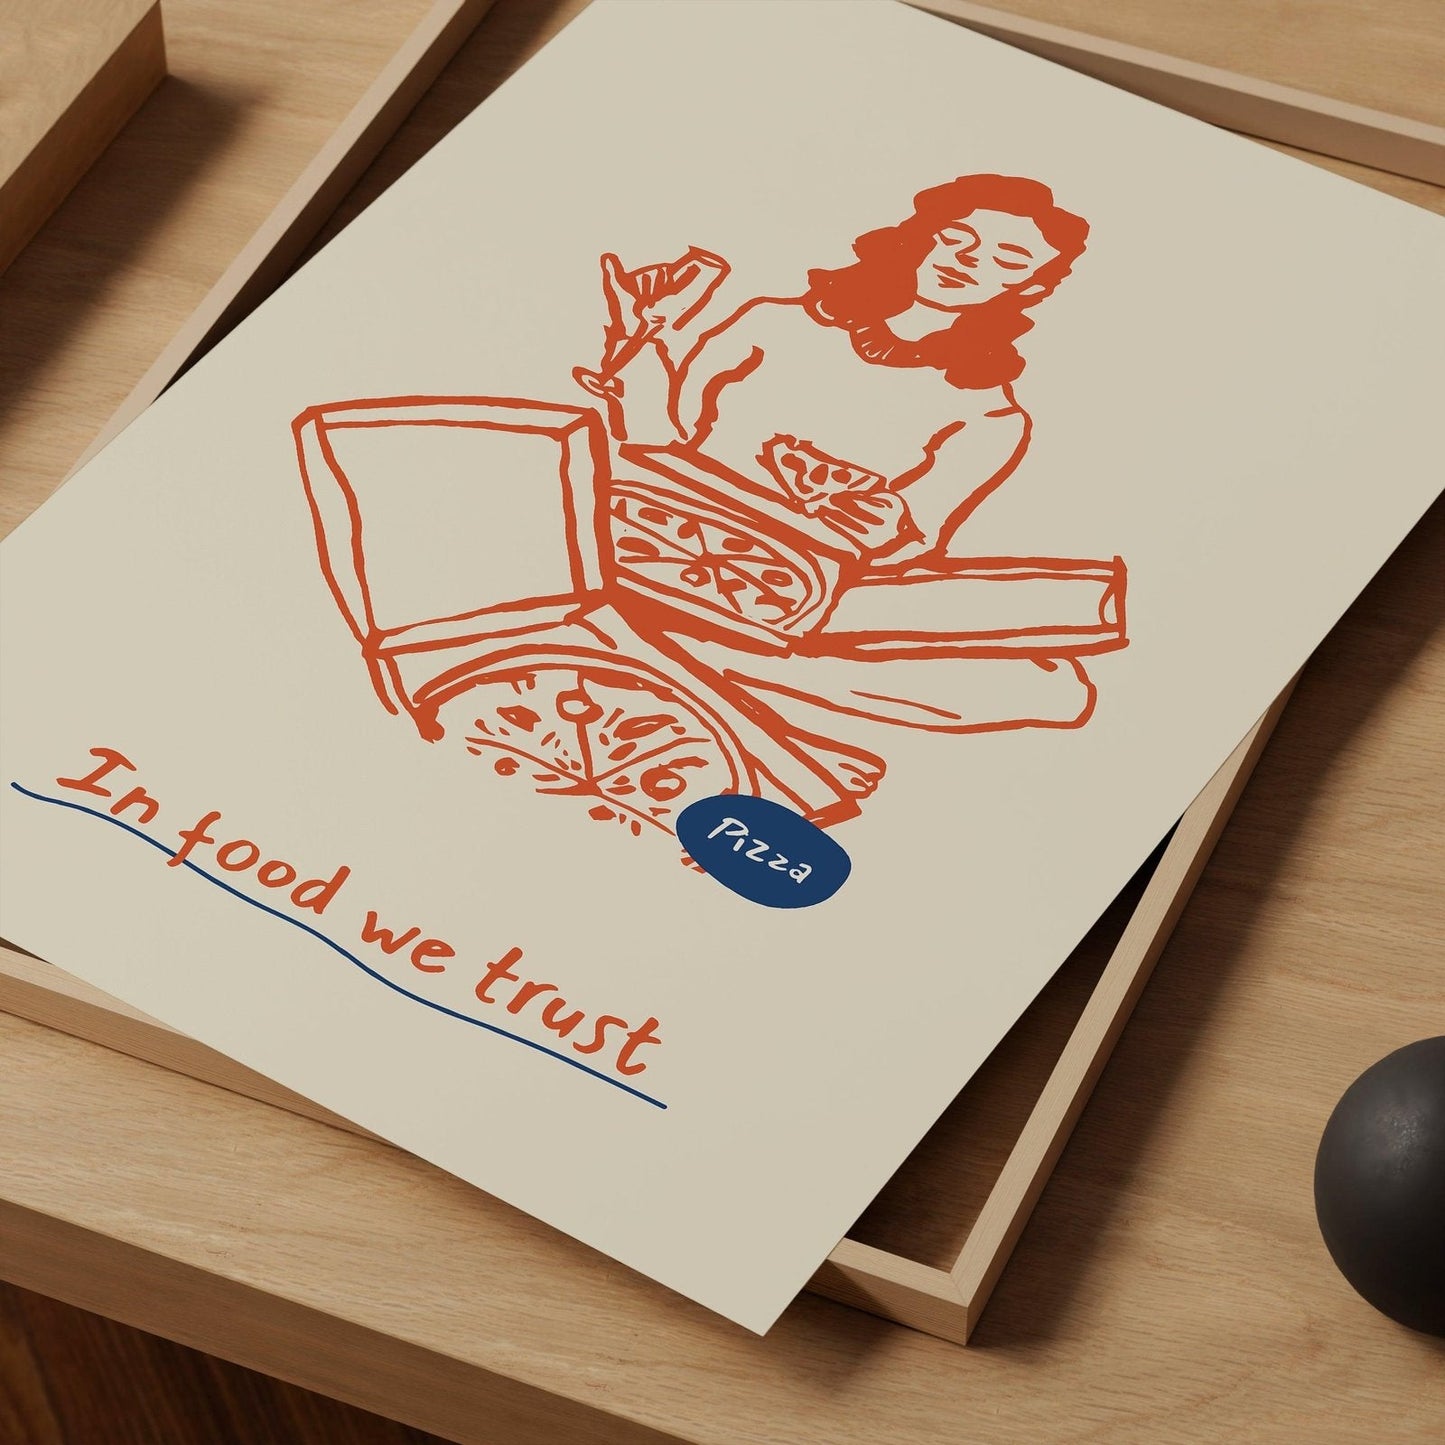 In Food & Pizza We Trust Art Print-Skudaboo